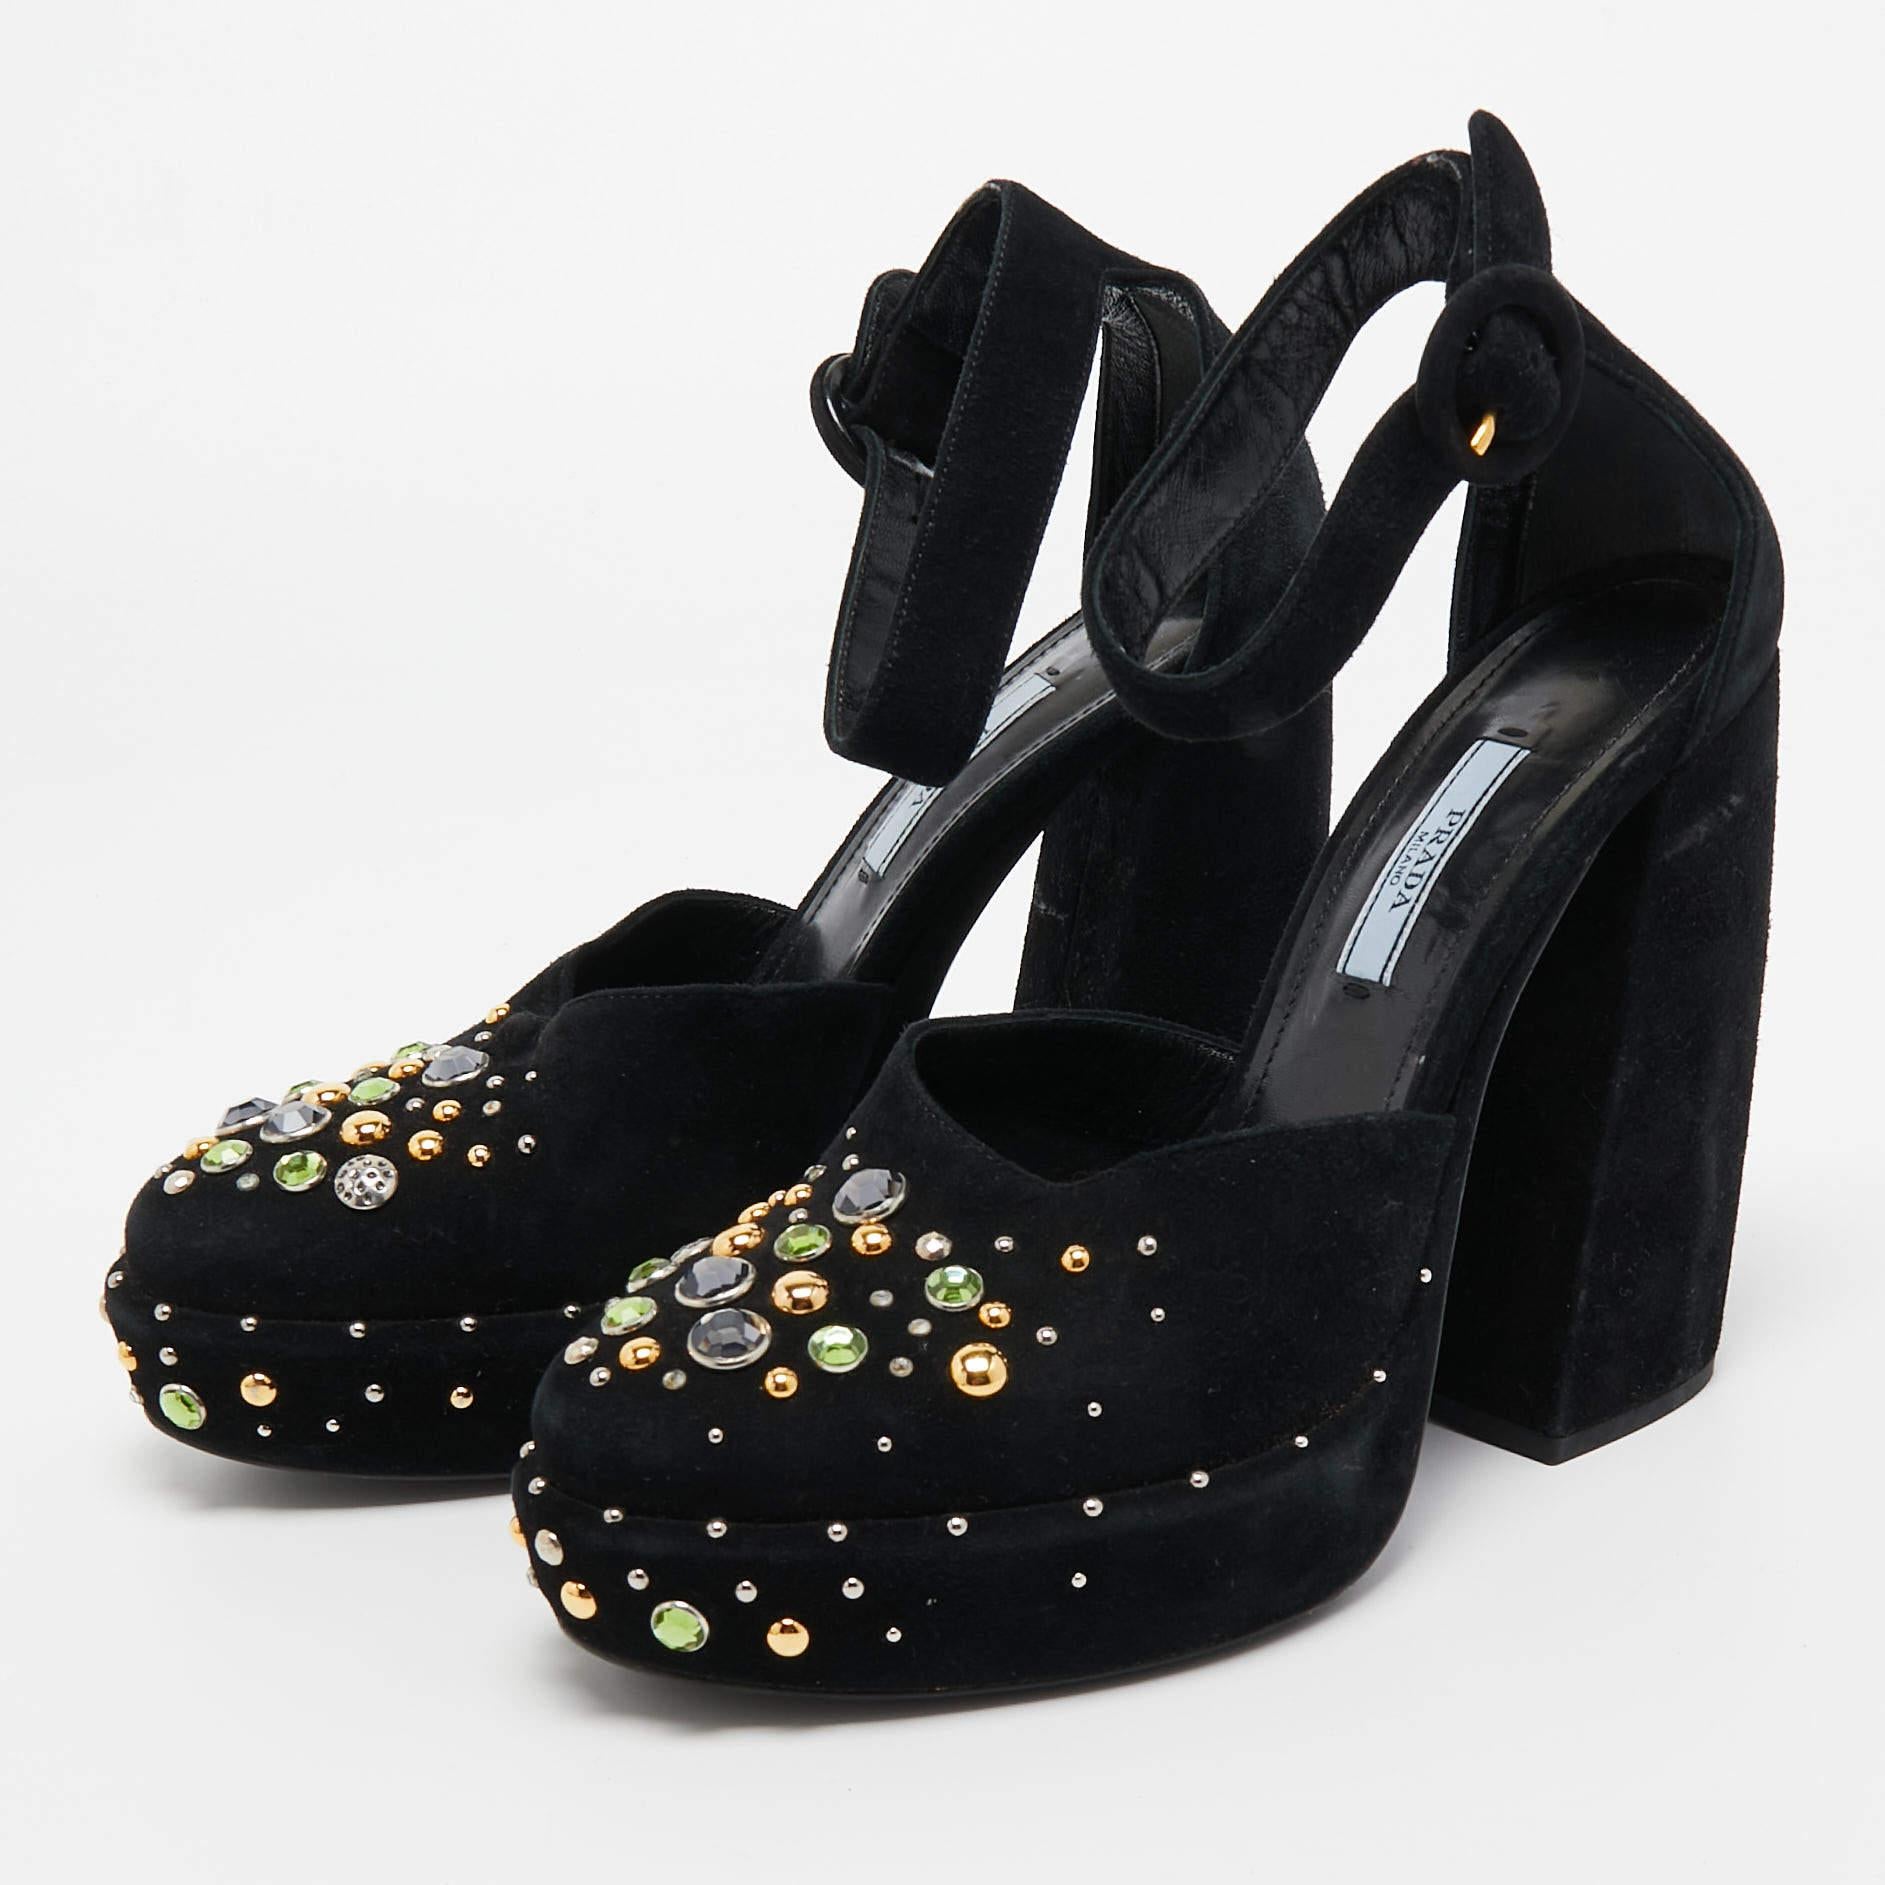 Prada Black Suede Crystal Embellished Ankle Strap Pumps Size 38.5 In Good Condition For Sale In Dubai, Al Qouz 2